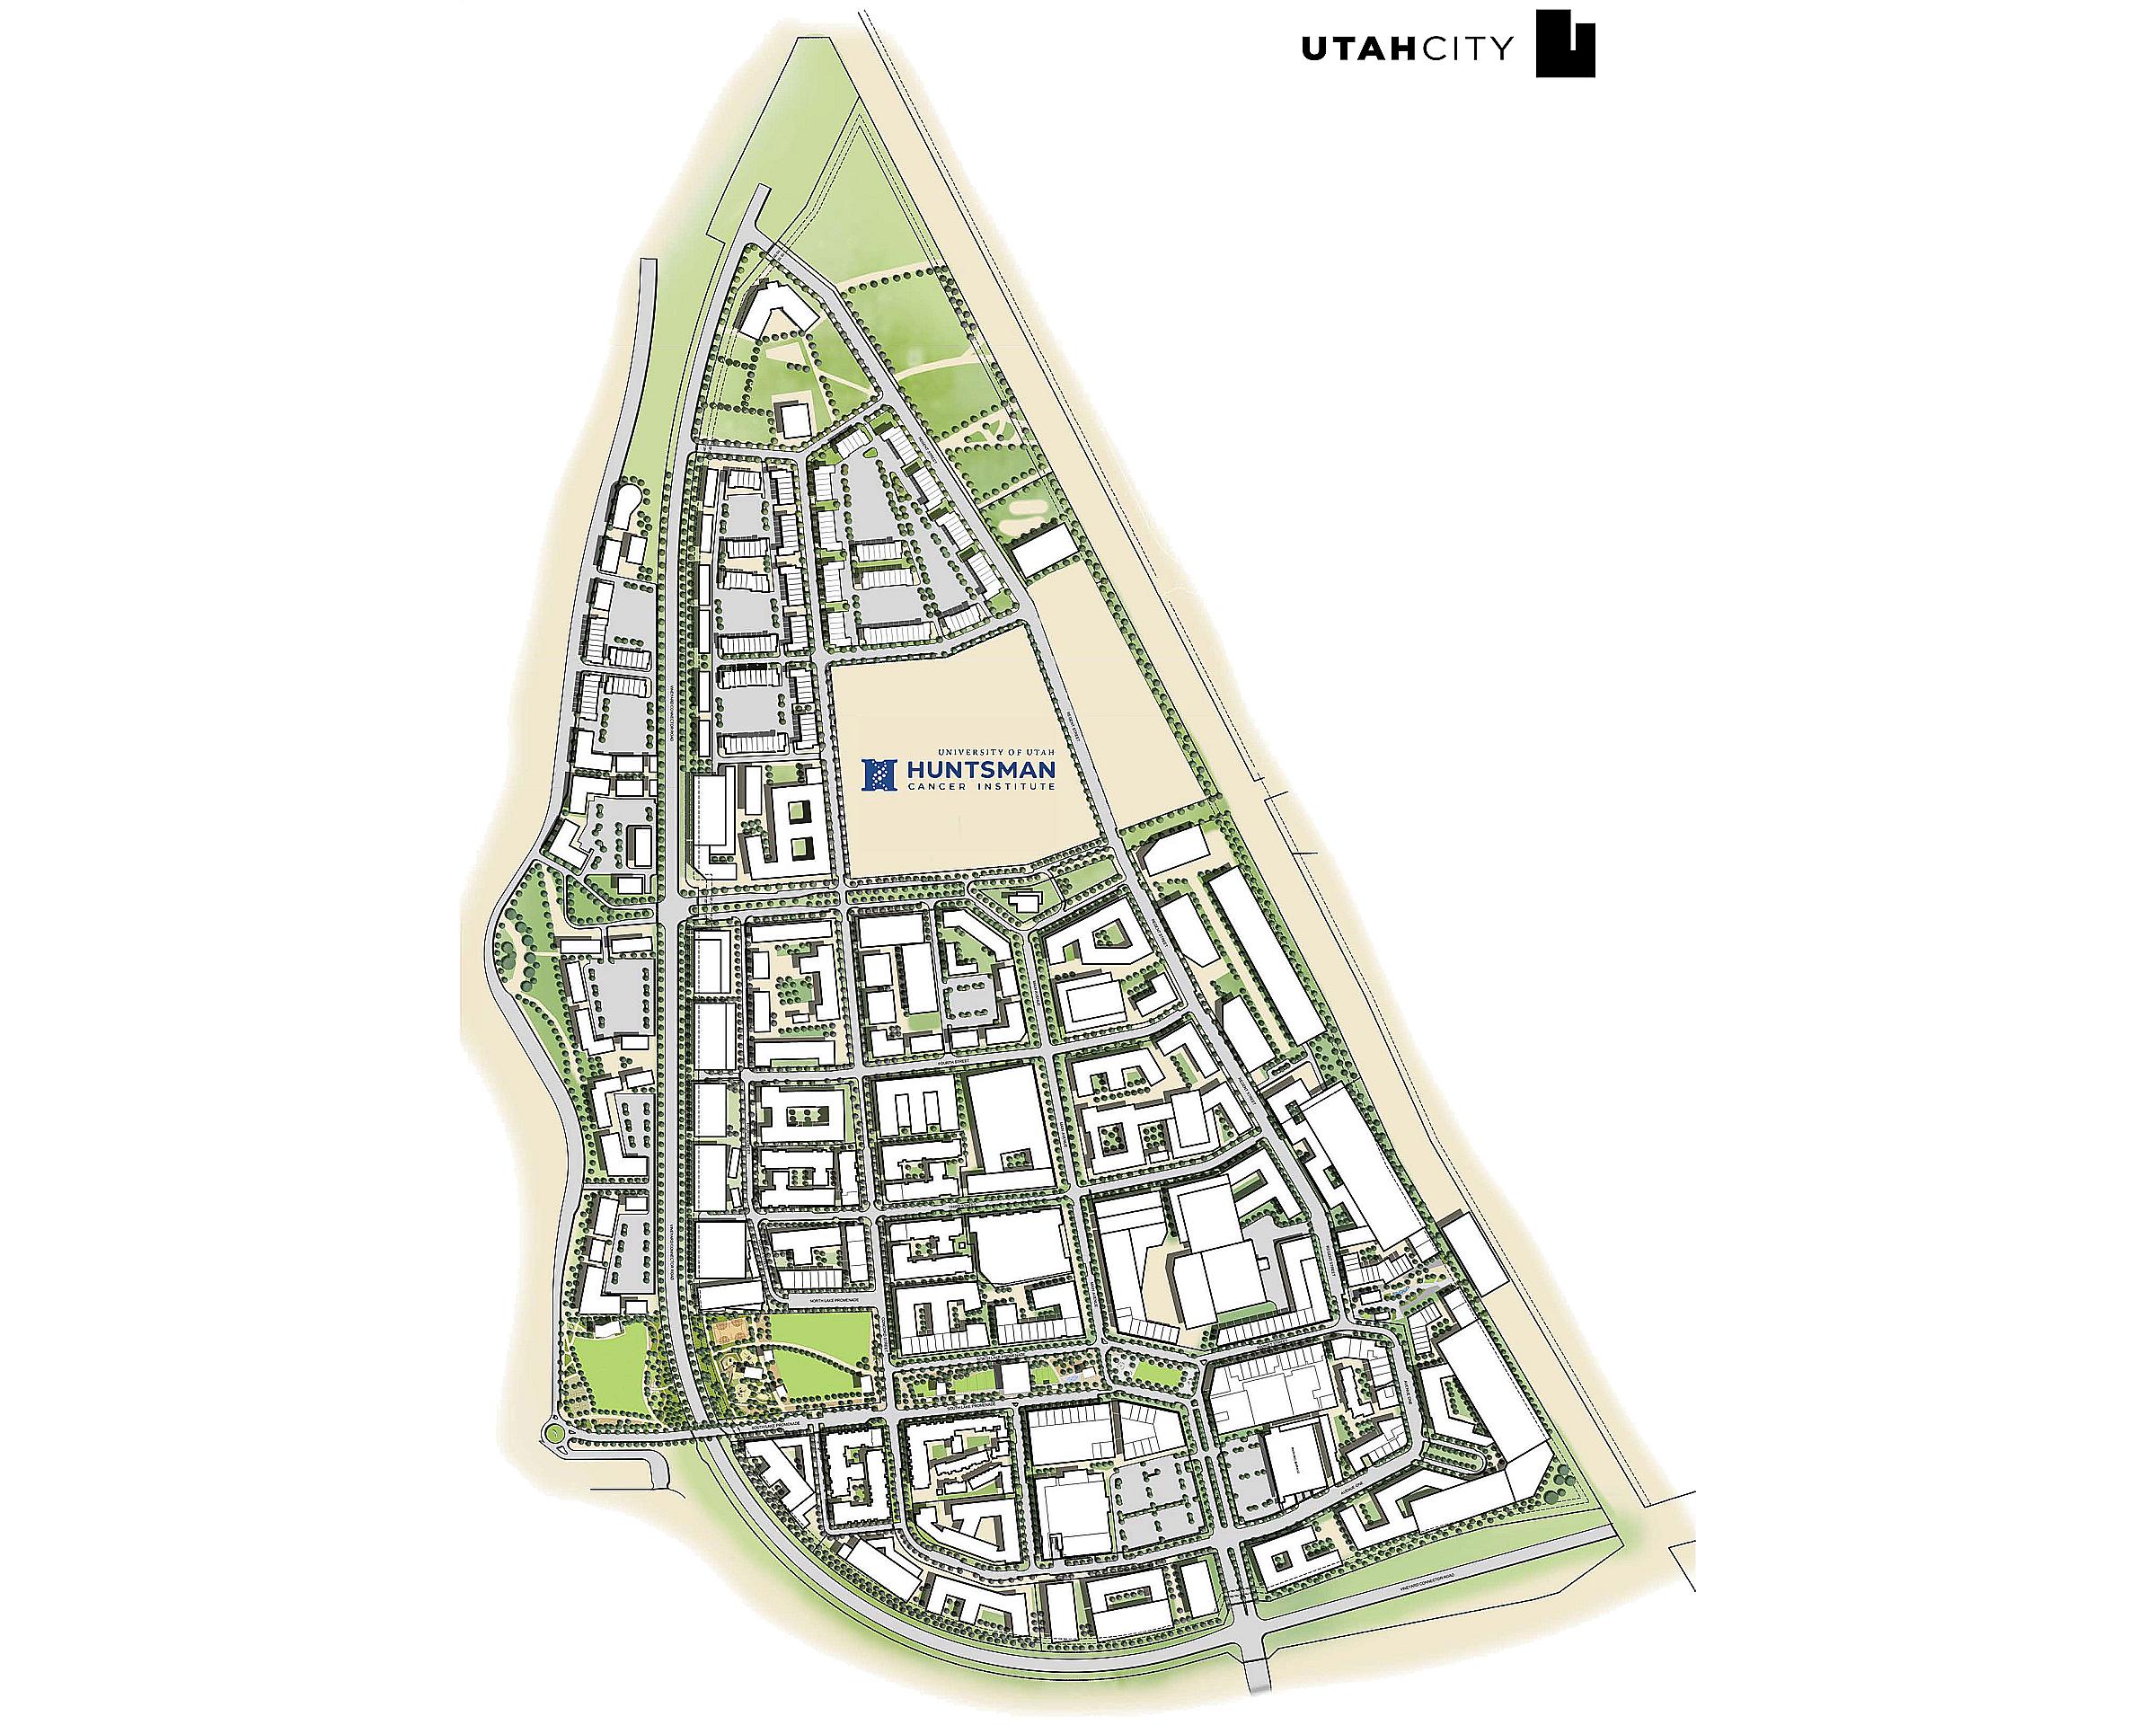 Overhead rendering of the site plan for Huntsman Cancer Institute's Vineyard campus in Utah County